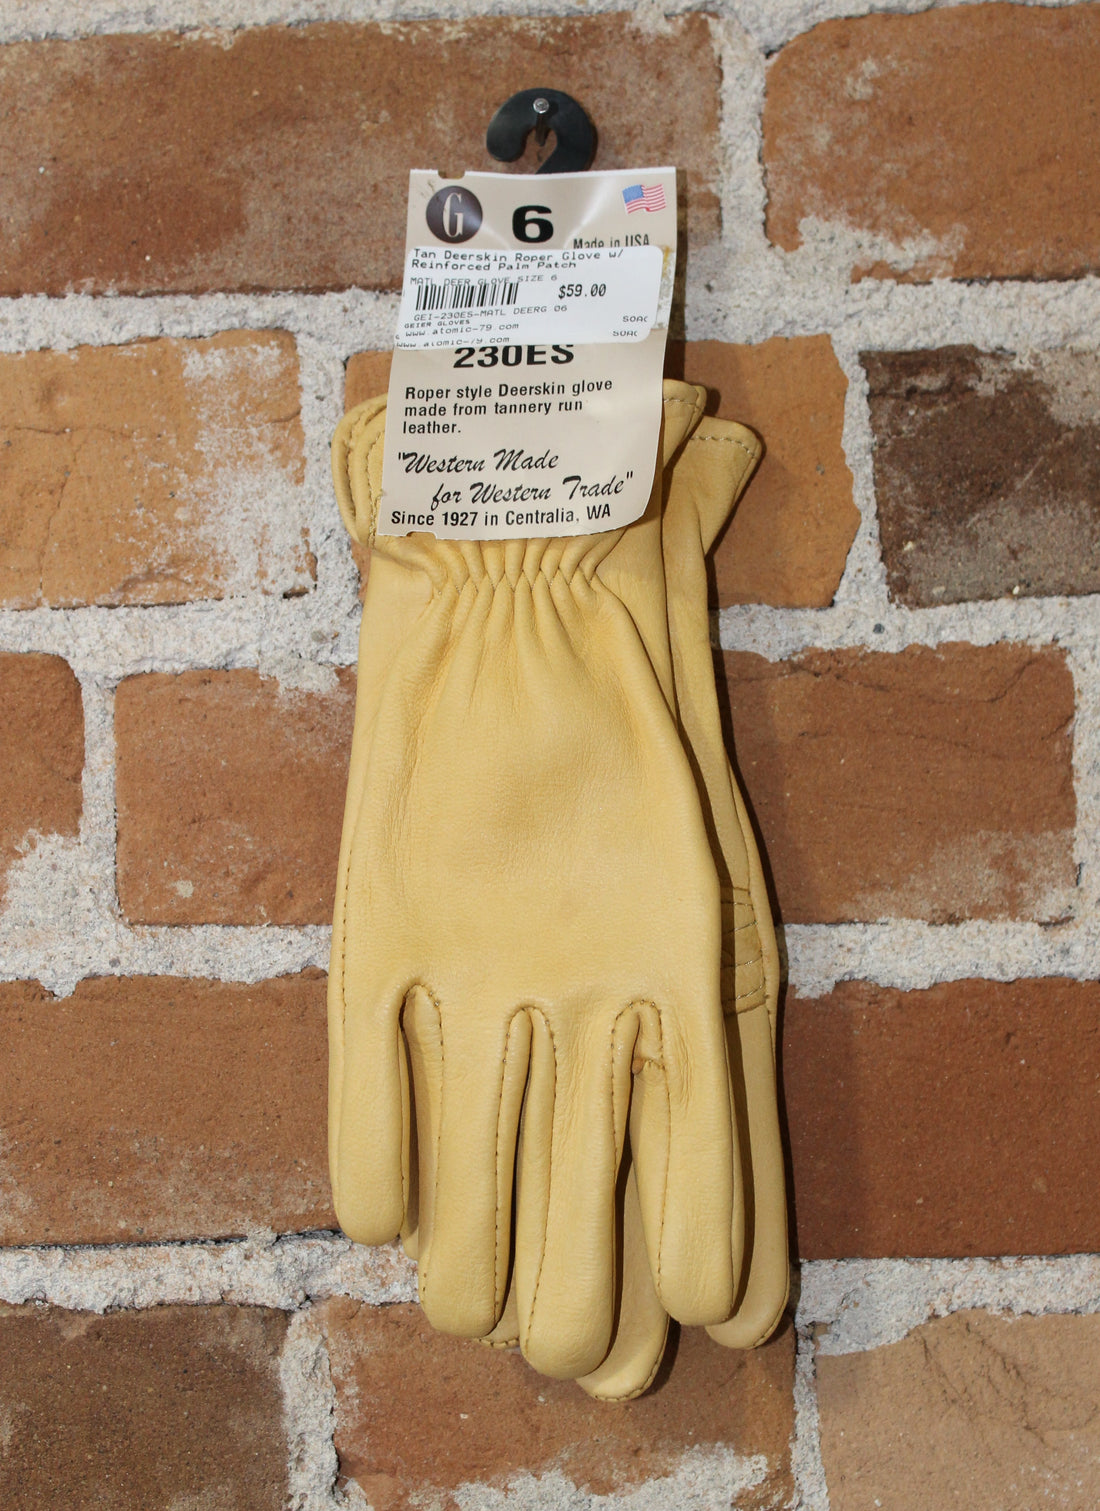 Tan Deerskin Roper Glove W/Reinforced Palm Patch view of gloves